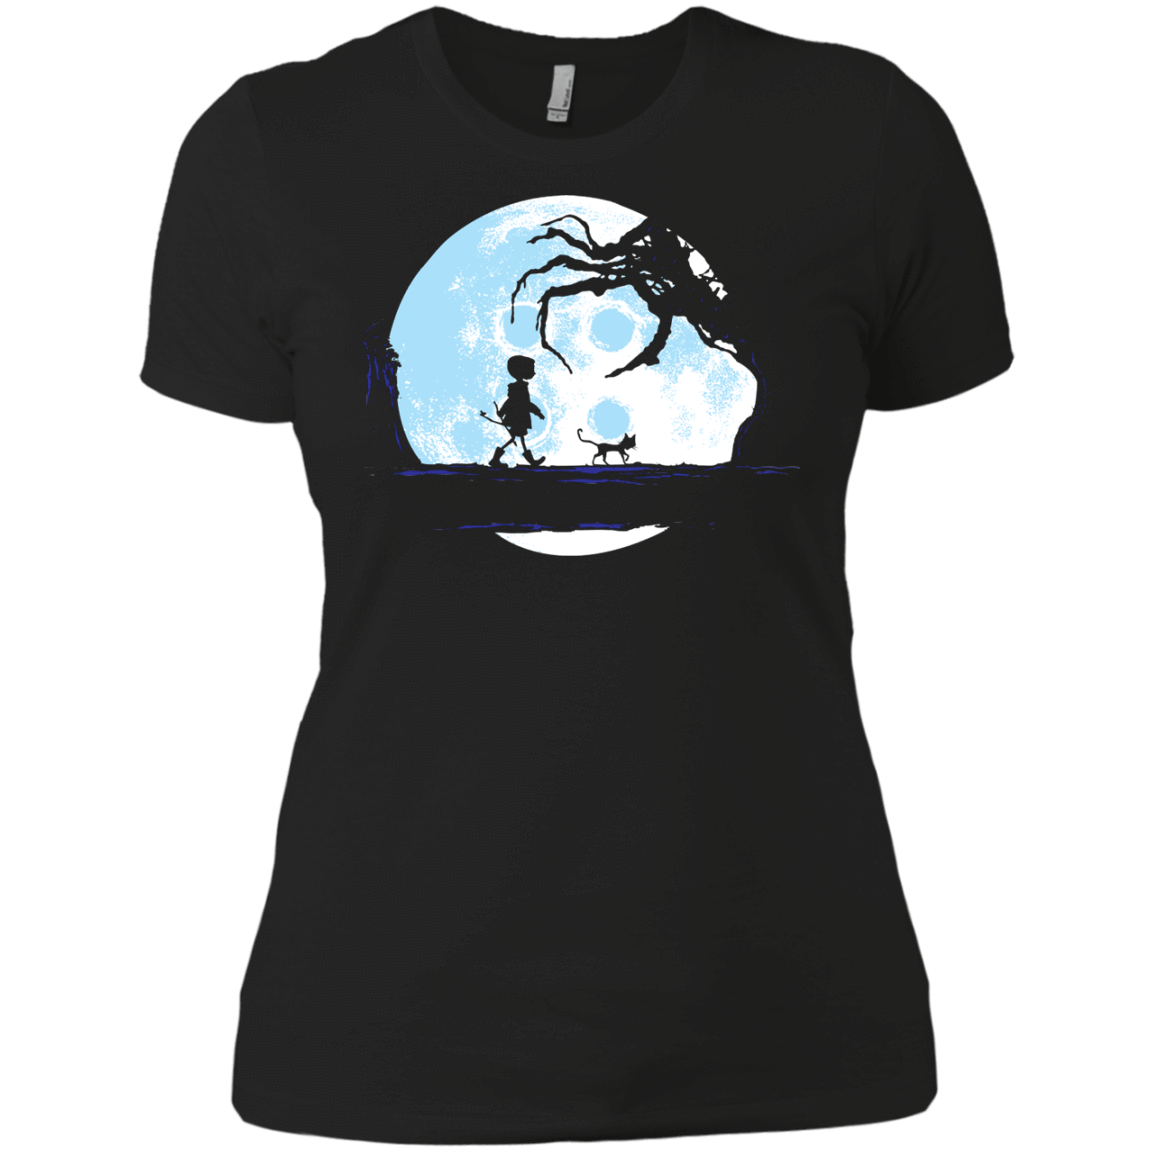 T-Shirts Black / X-Small Perfect Moonwalk- Coraline Women's Premium T-Shirt